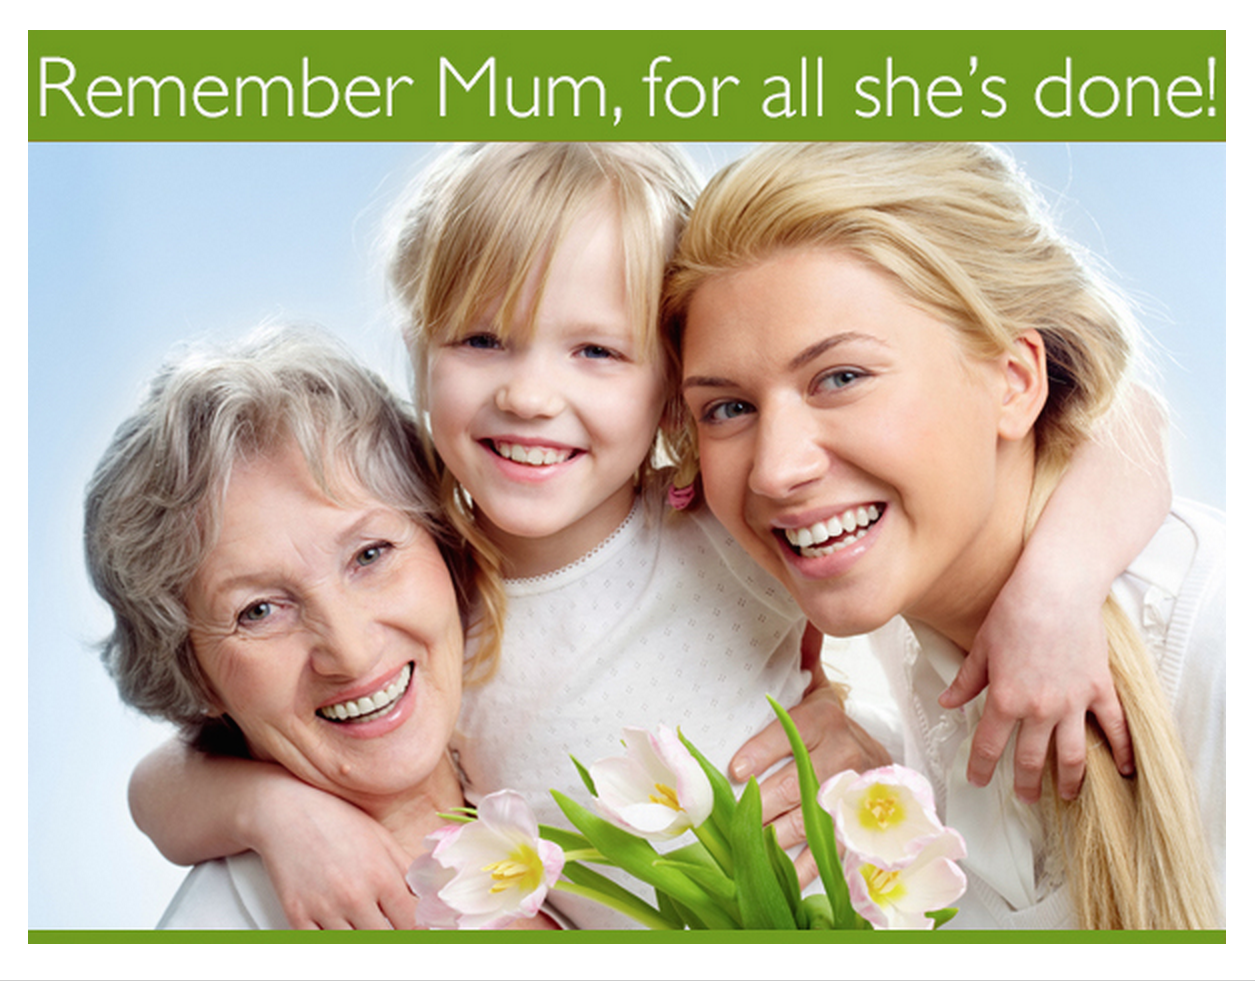 Remember Mum campaign